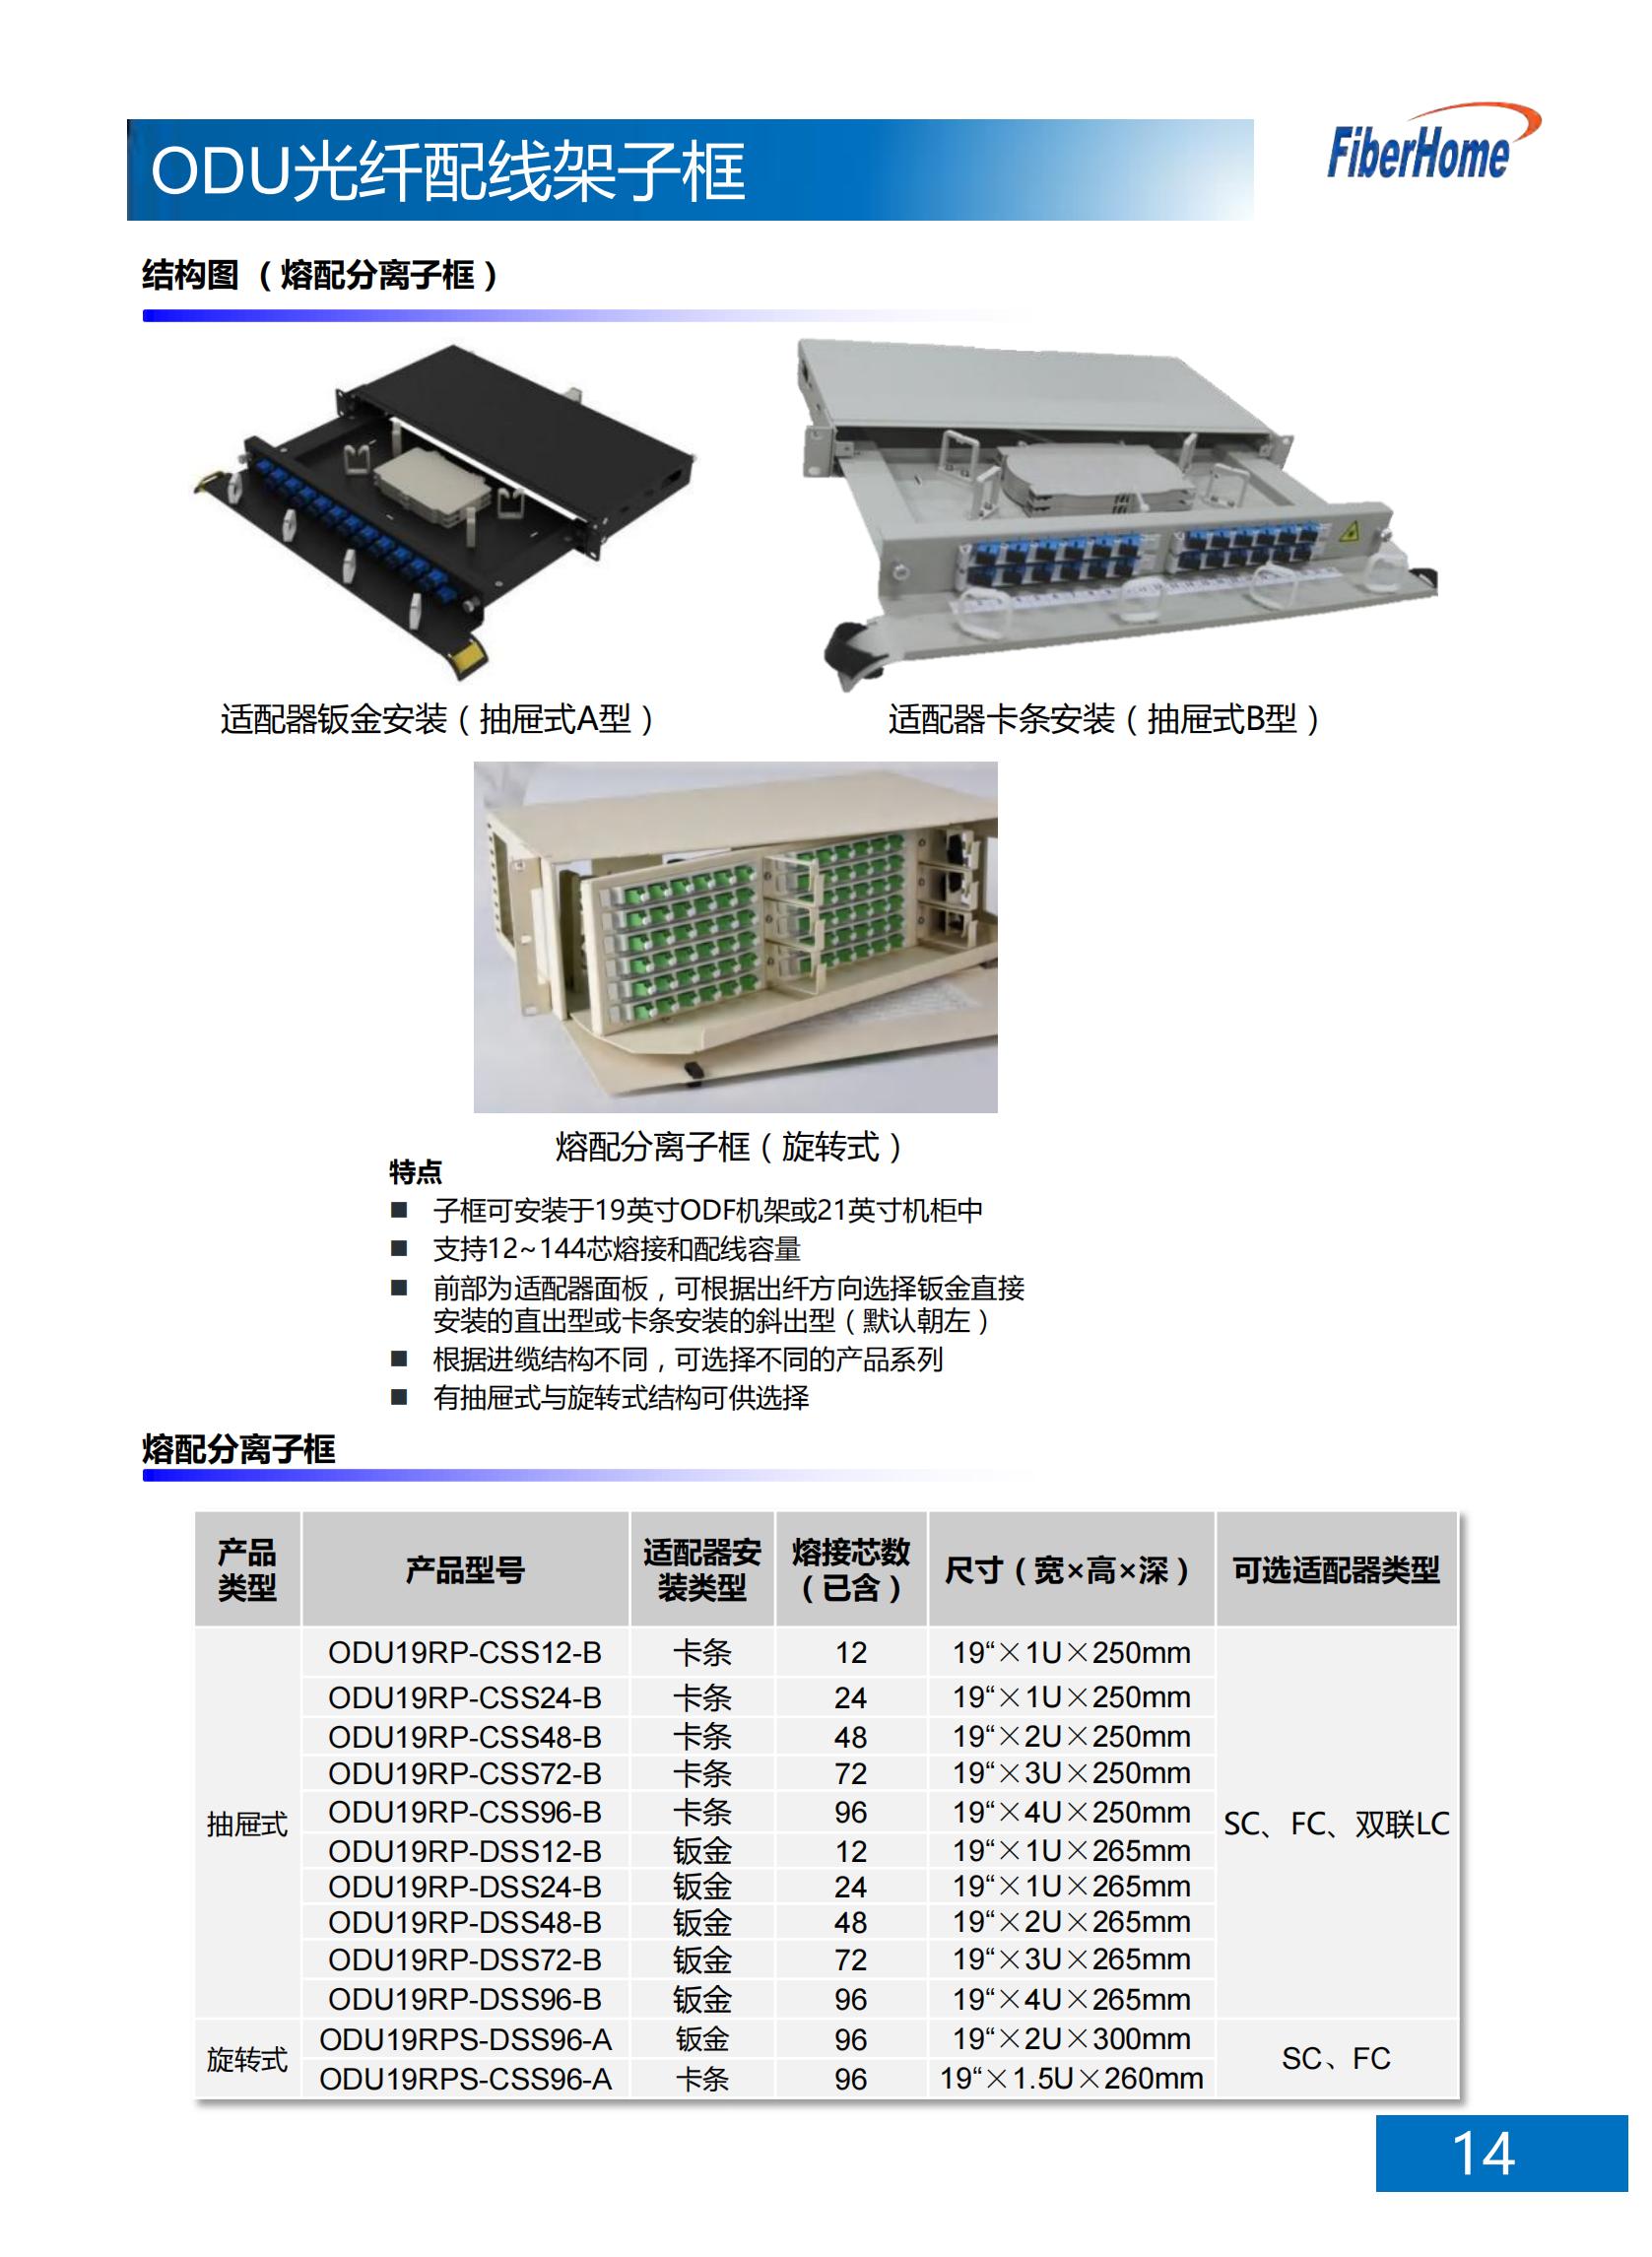 72-core ODU optical fiber distribution shelf frame ODU19T-A1272-A-SC (including 12-core SC fusion integration unit*6)